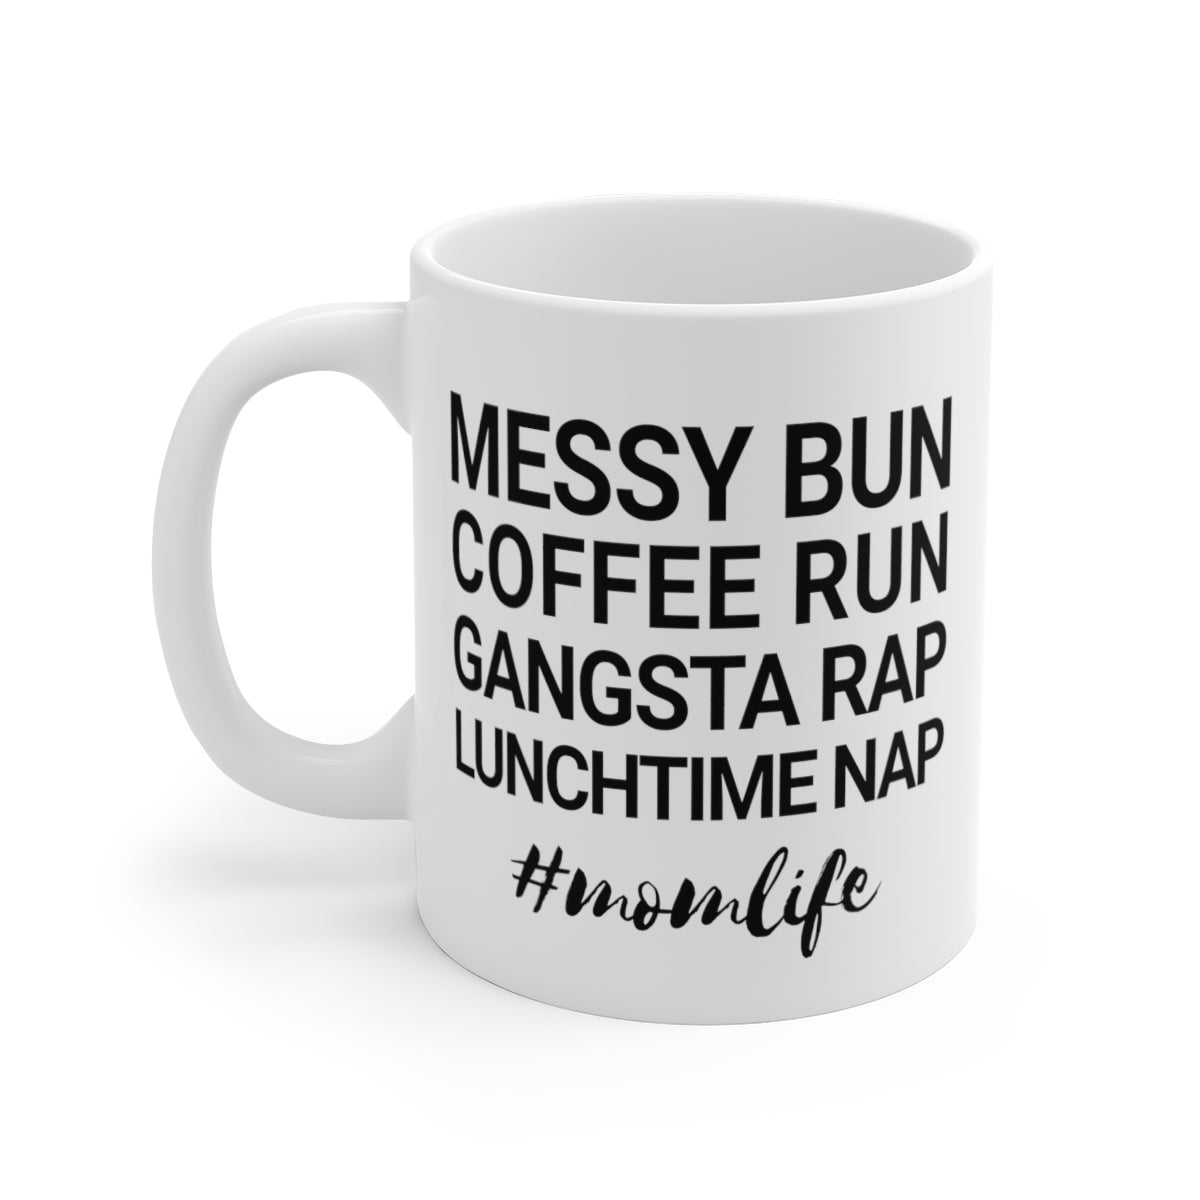 Messy Bun Coffee Run Gangsta Rap Lunchtime Nap #MomLife MomLife Mothers Day White Ceramic Mug-11oz-Archethype